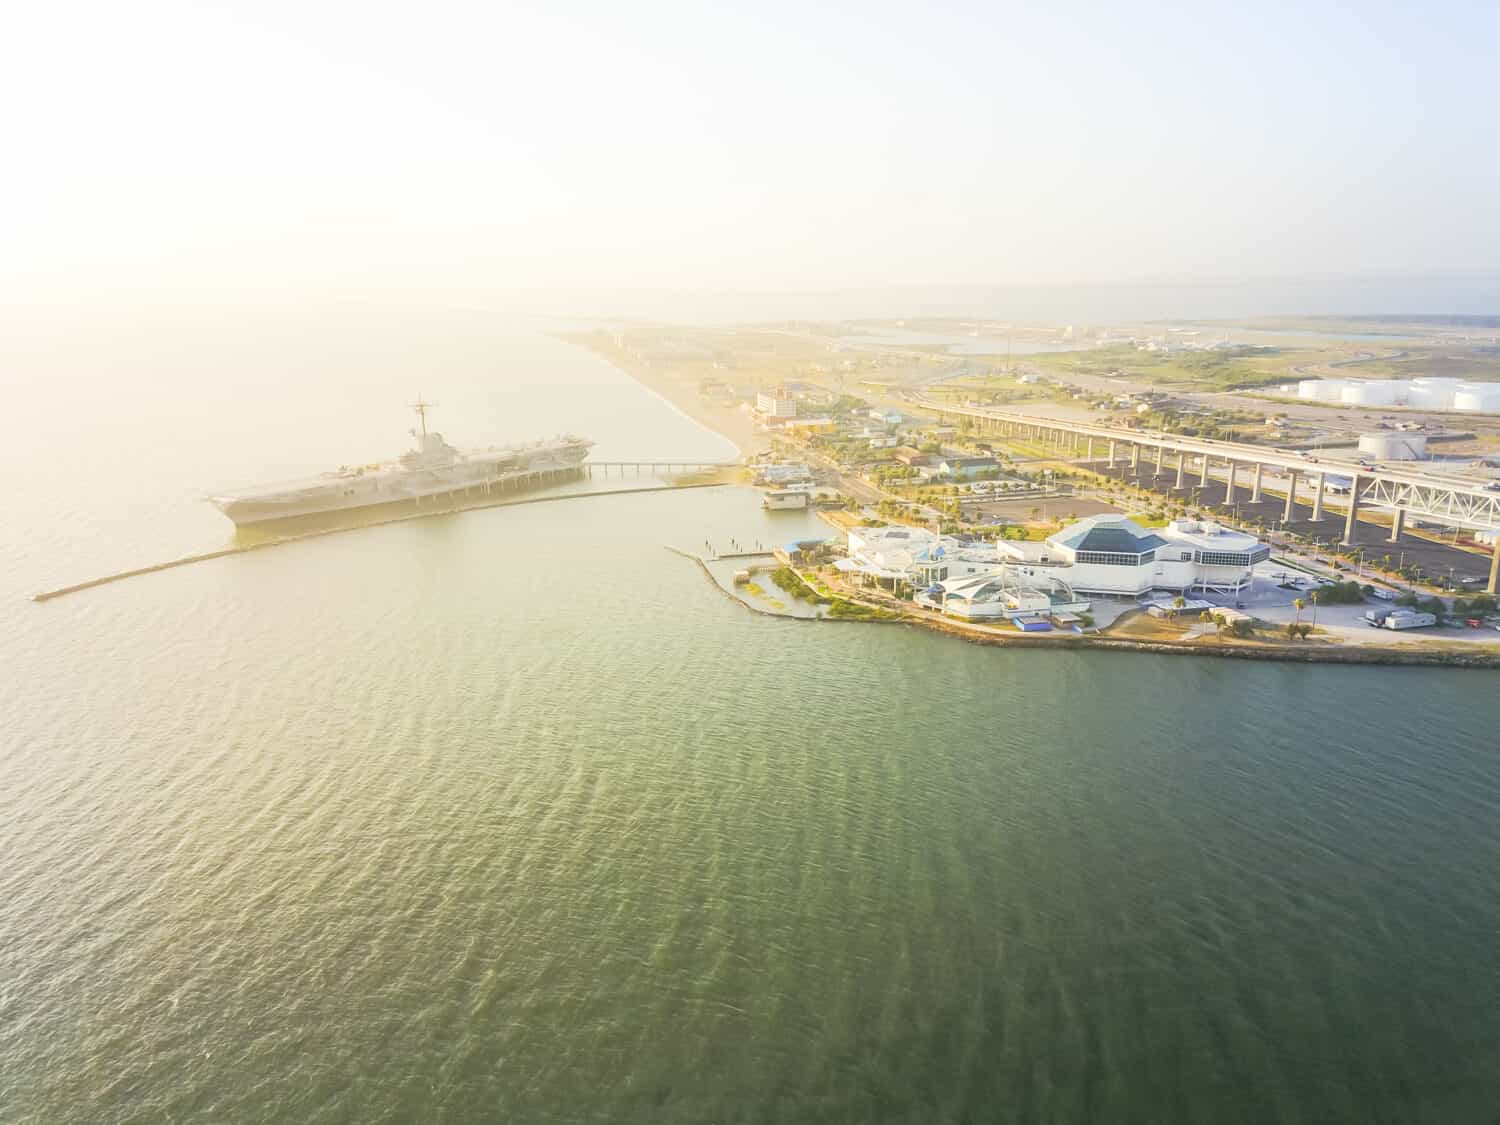 Aerial view North Beach in Corpus Christi, Texas, USA with aircraft carrier ship